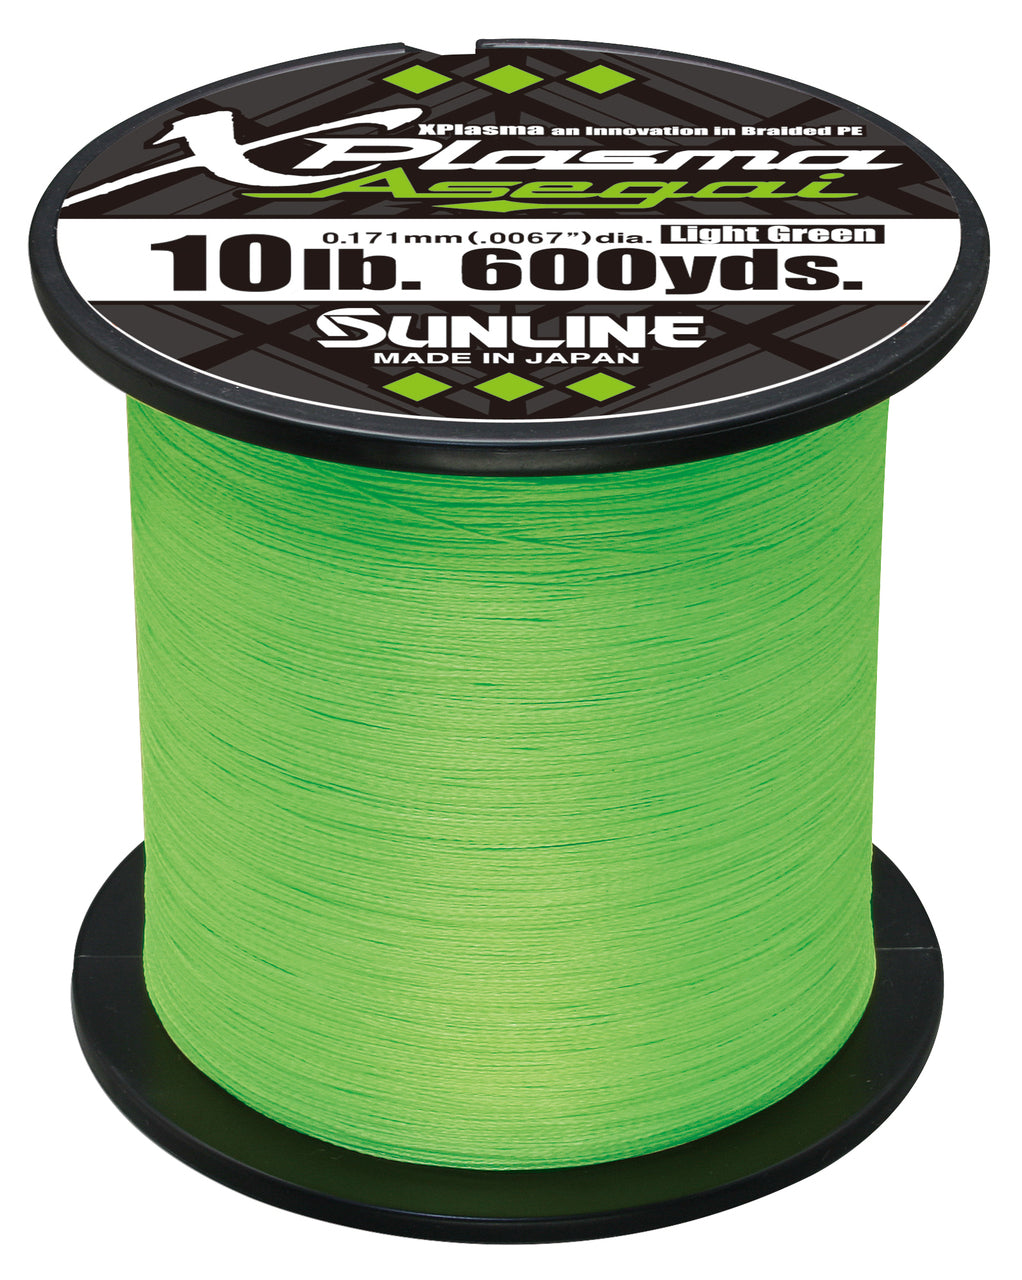 Sunline Xplasma Asegai Light Green 600 Yards / 12 lb.